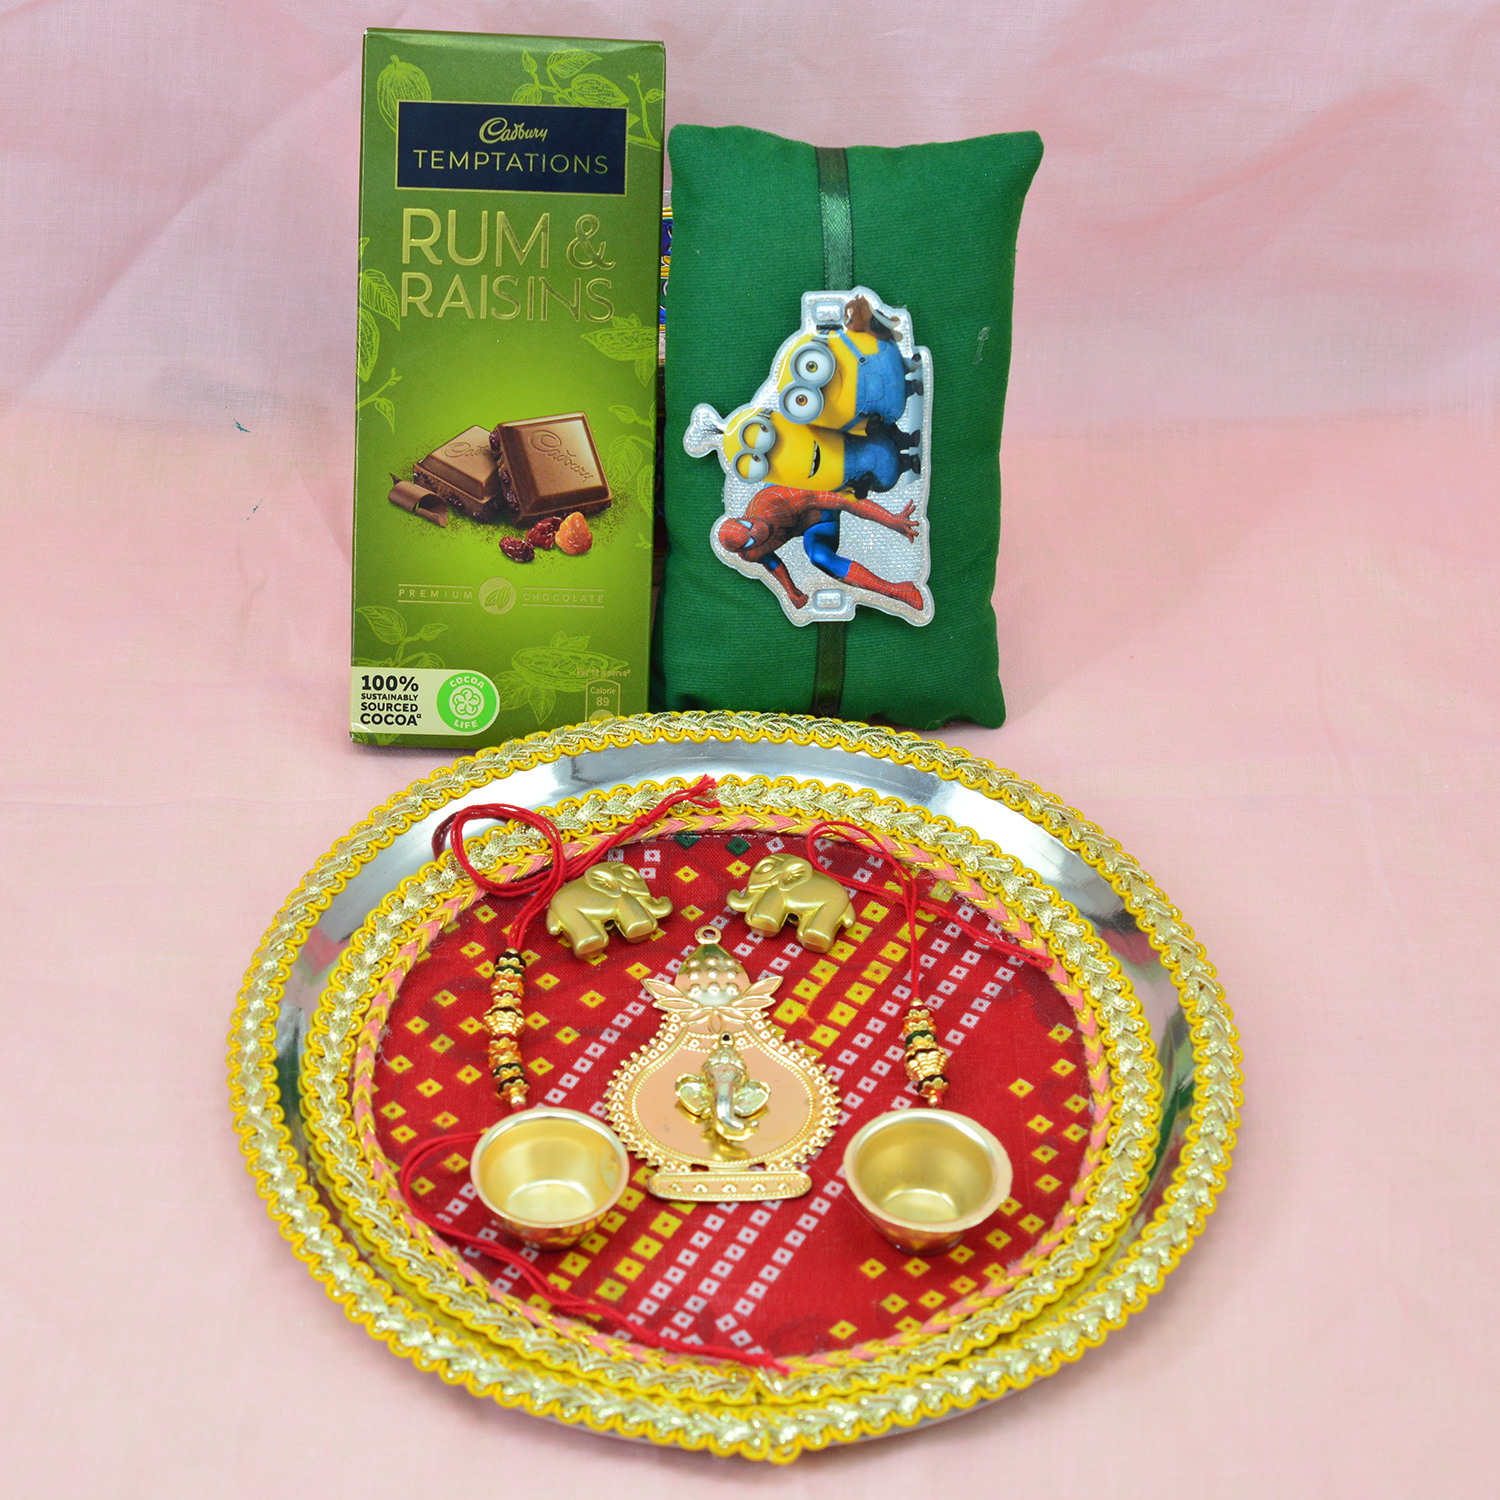 Divine Ganesha and Elephants Studded Rakhi Pooja Thali with Cadbury Temptation Rum and Raisins Chocolate